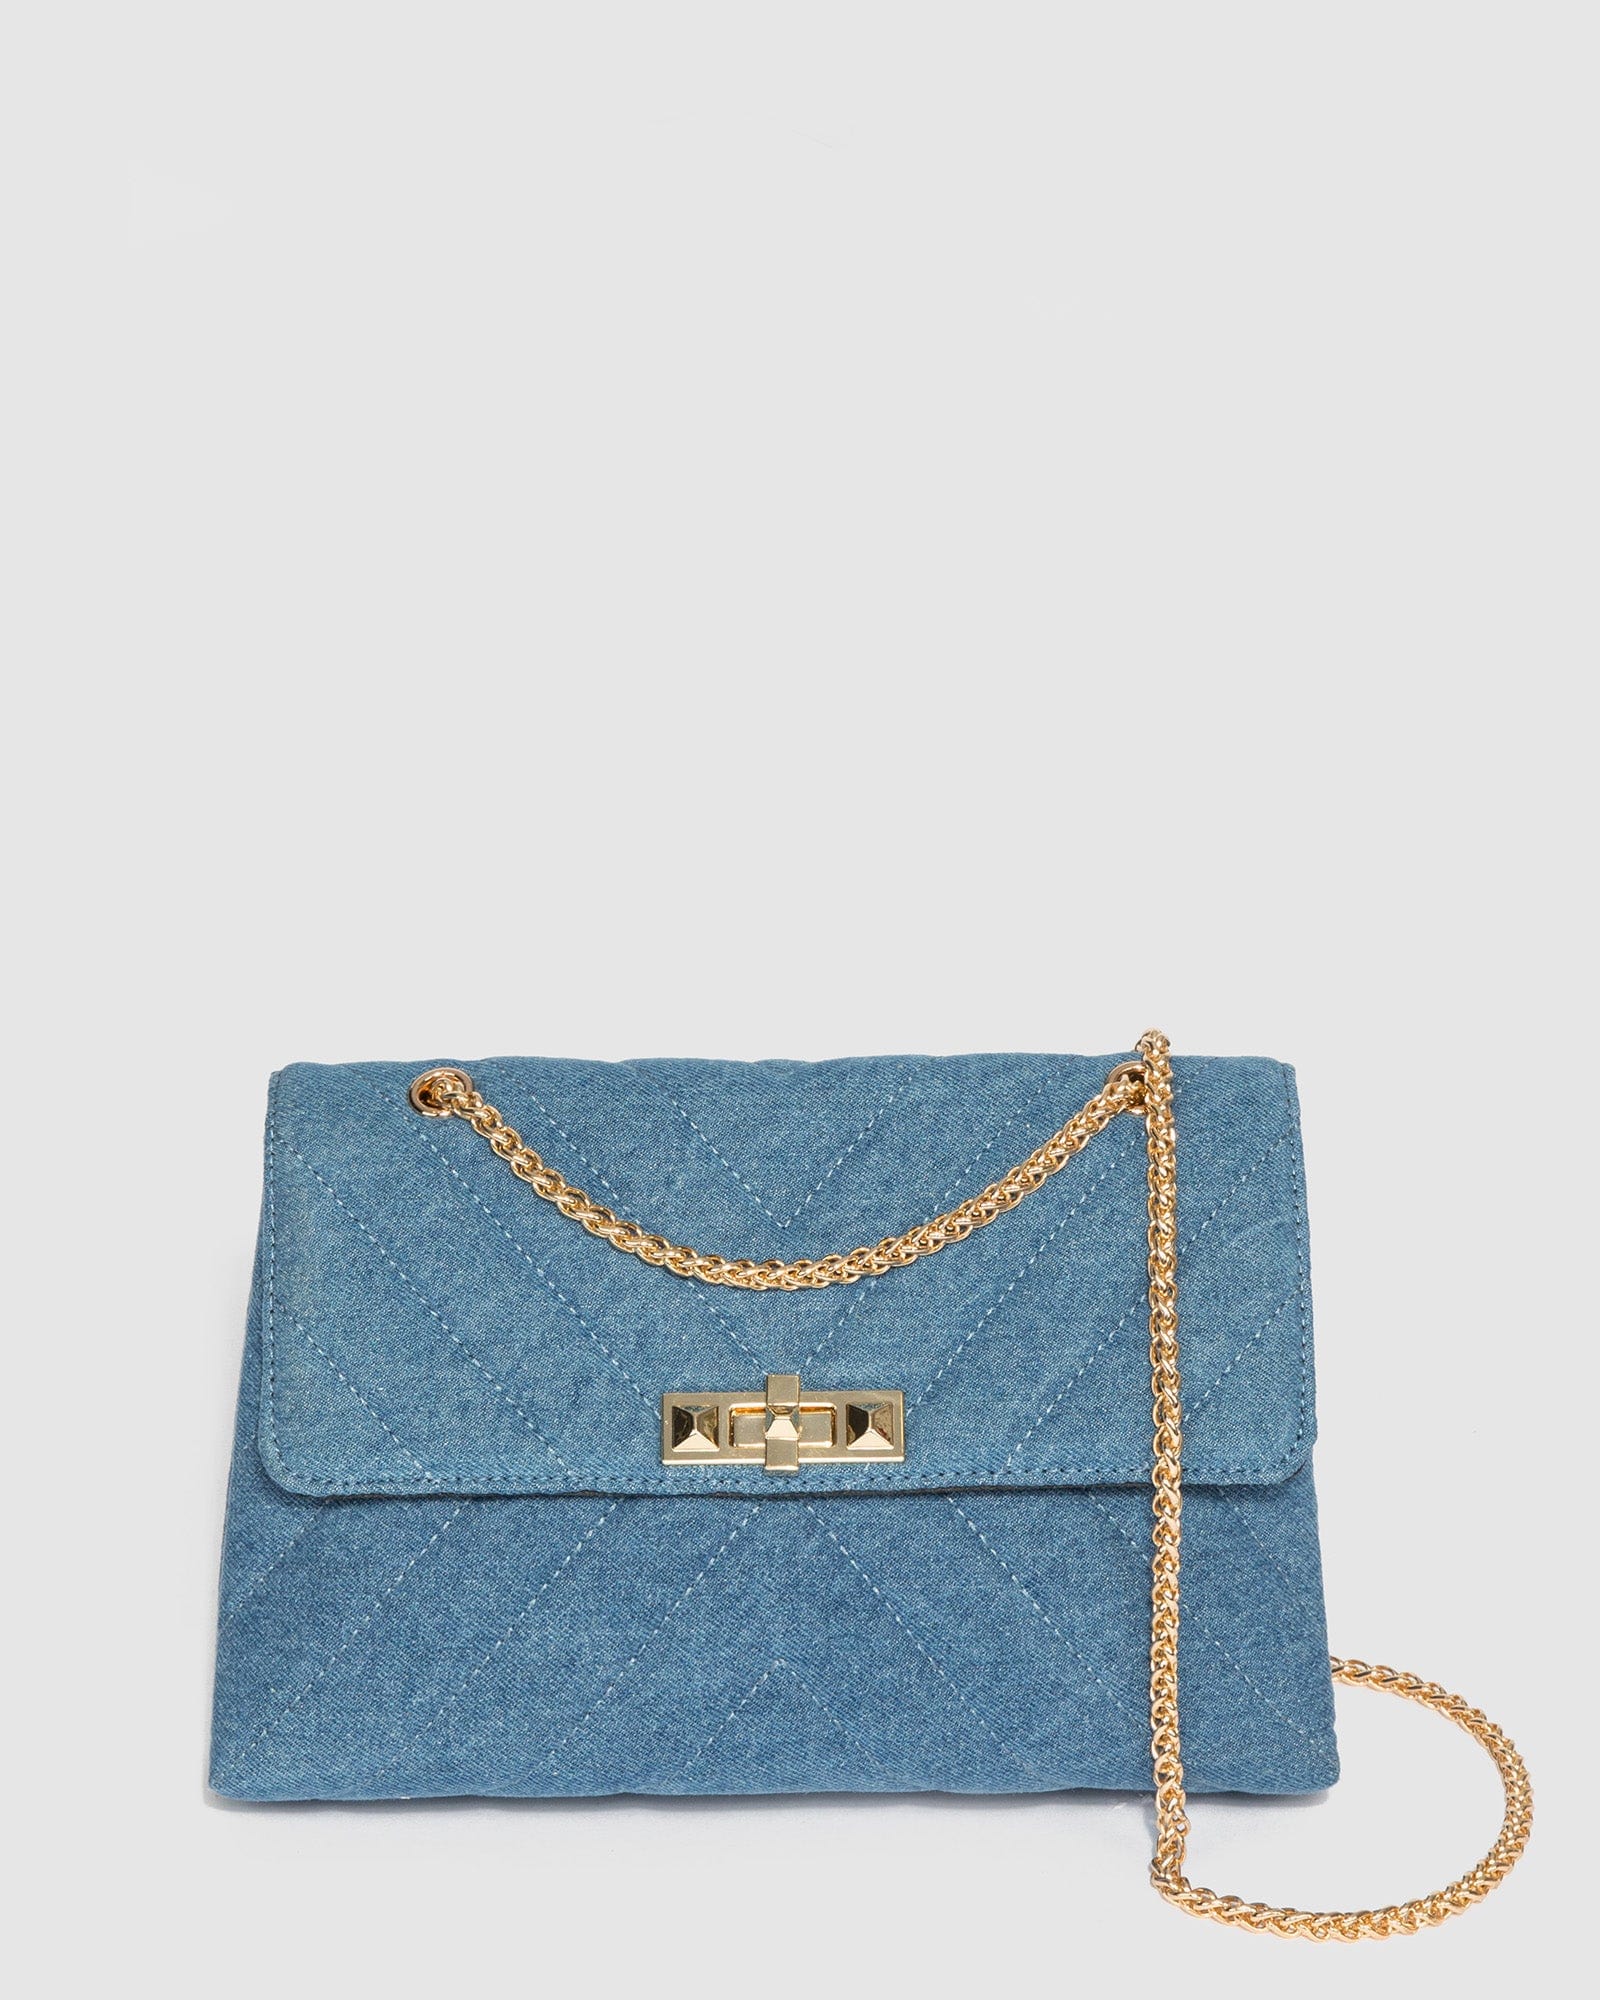 Handbags | Women's Handbags & Tote Bags Online & Instore – Page 11 – colette  by colette hayman